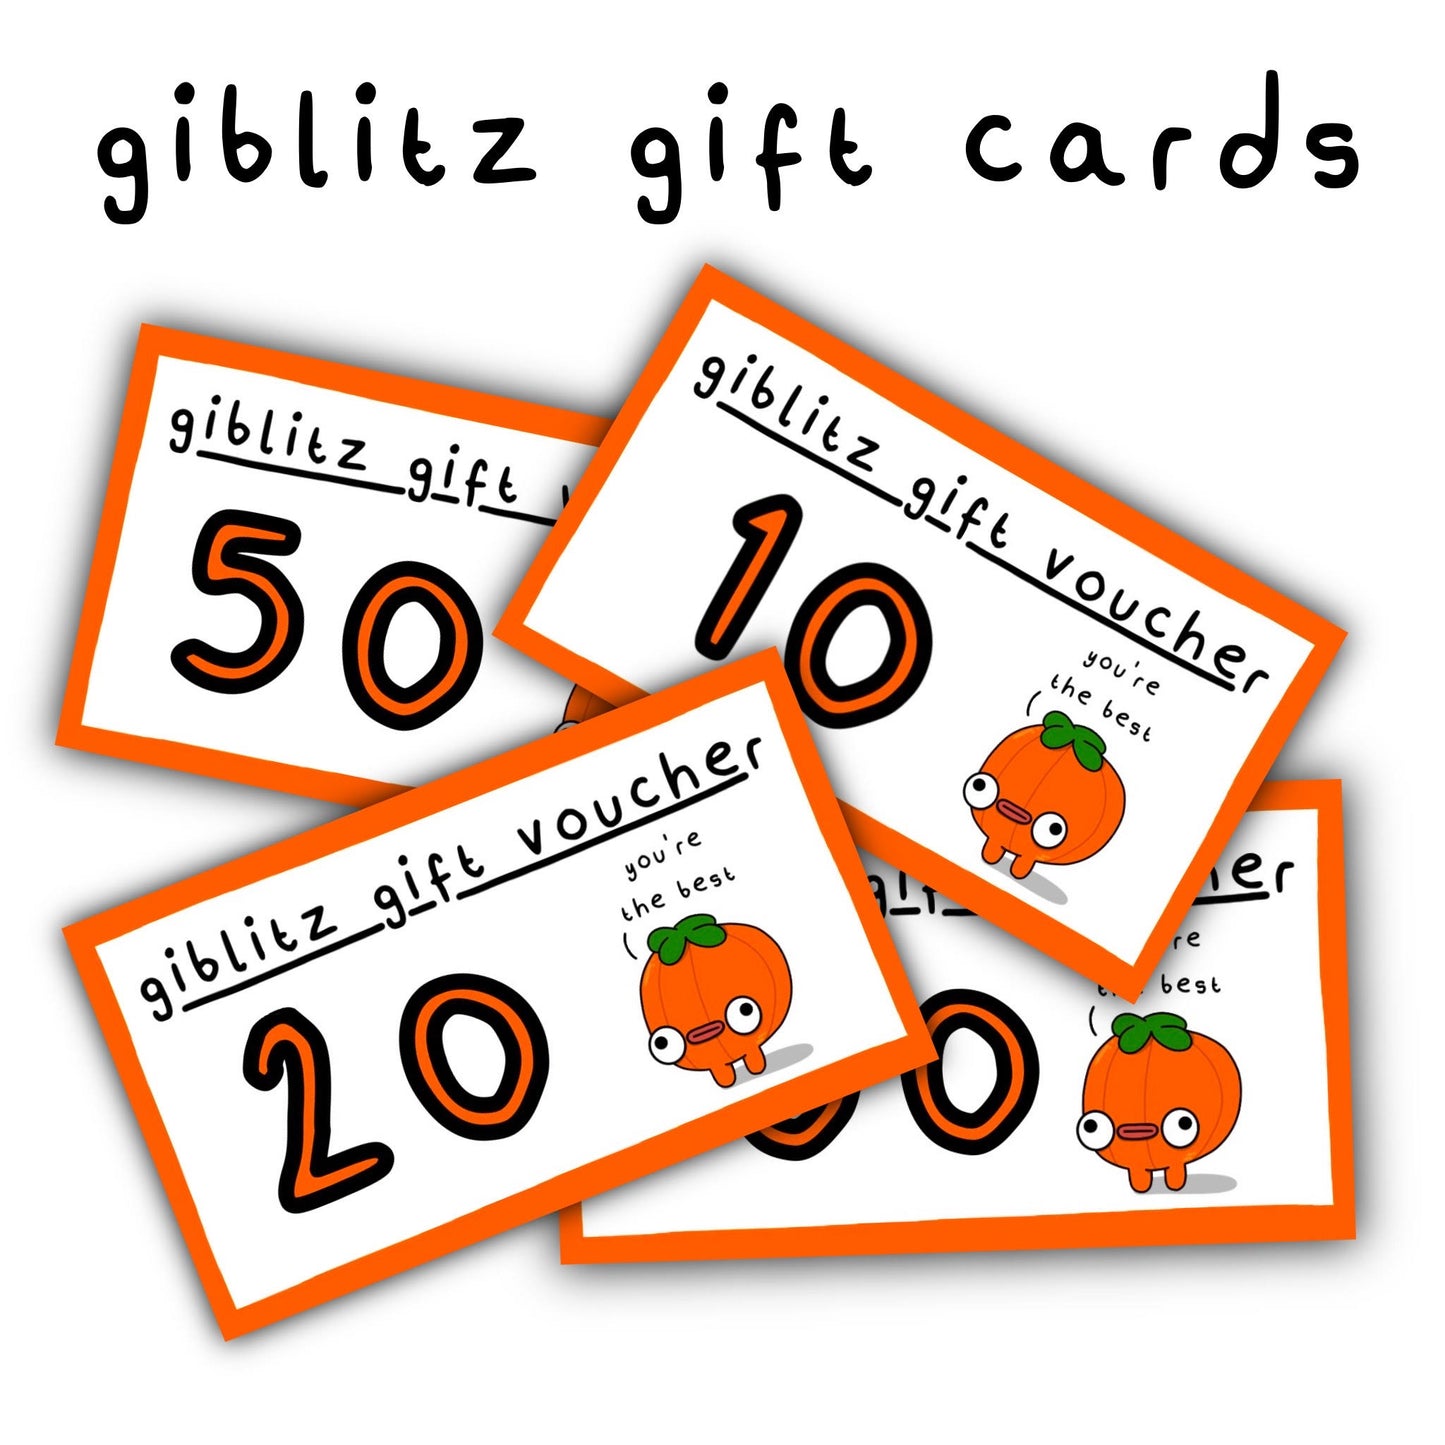 giblitz gift card